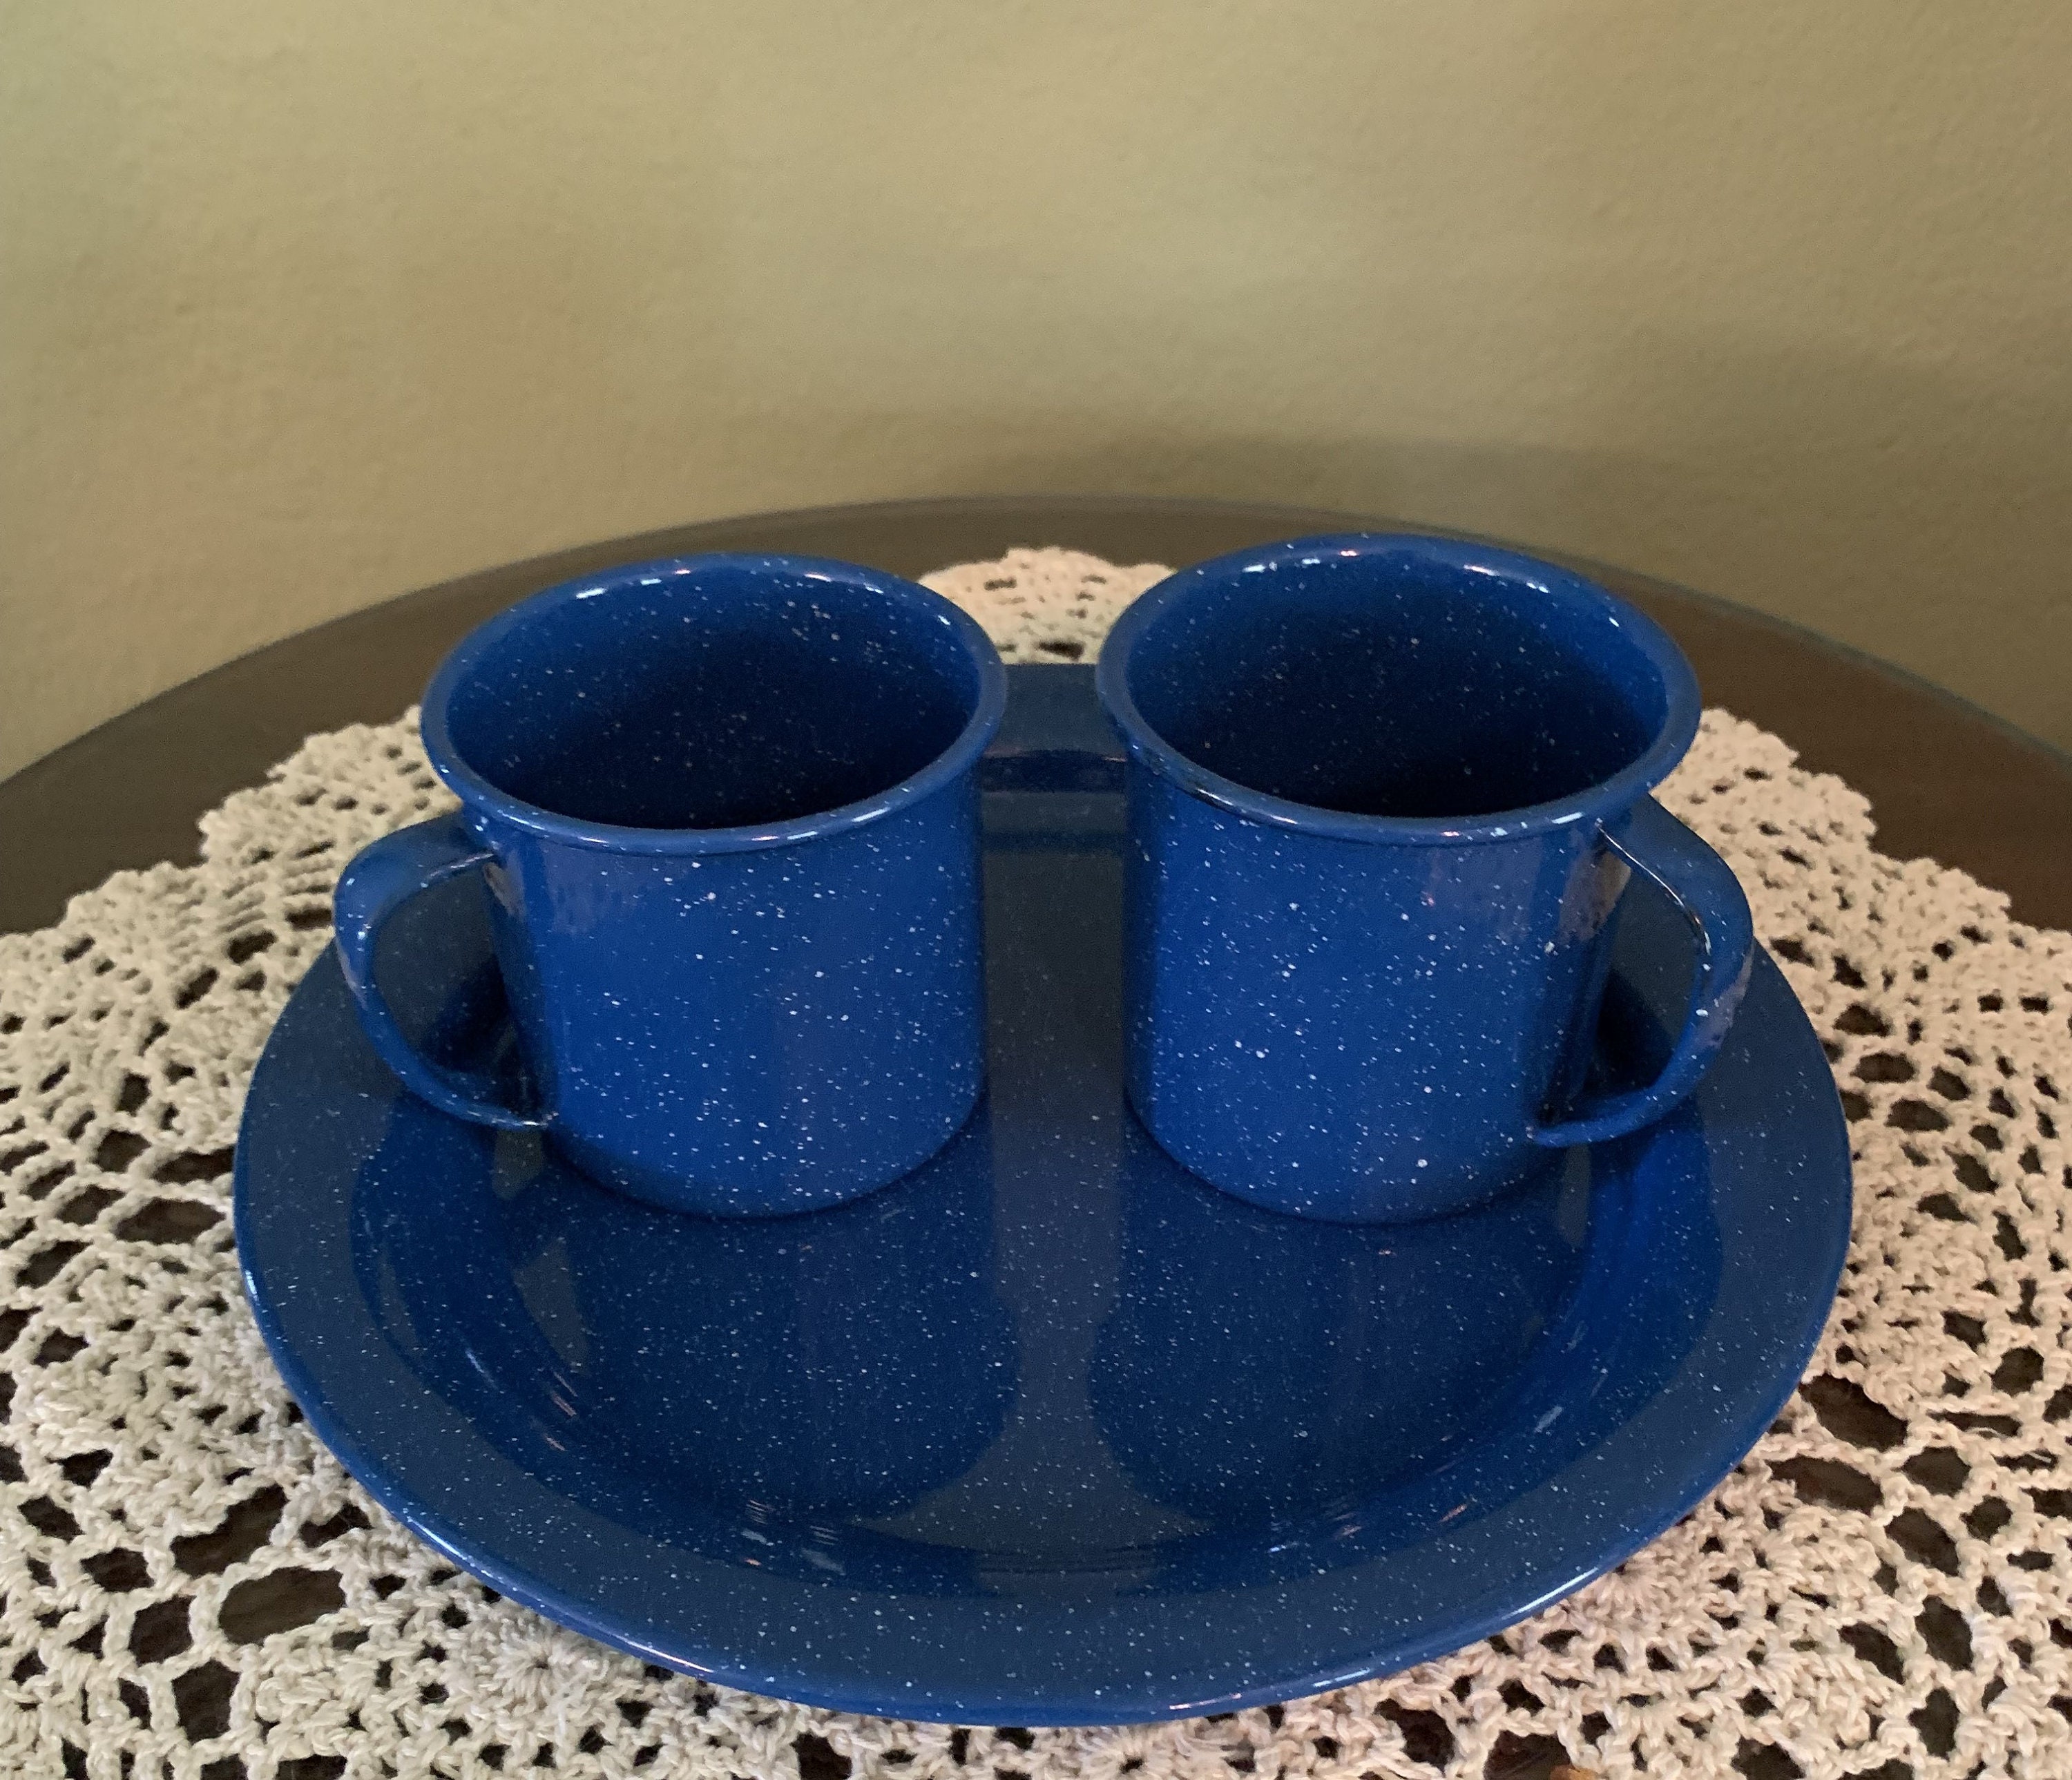 Danner - Danner Enamelware 12oz Mug Blue